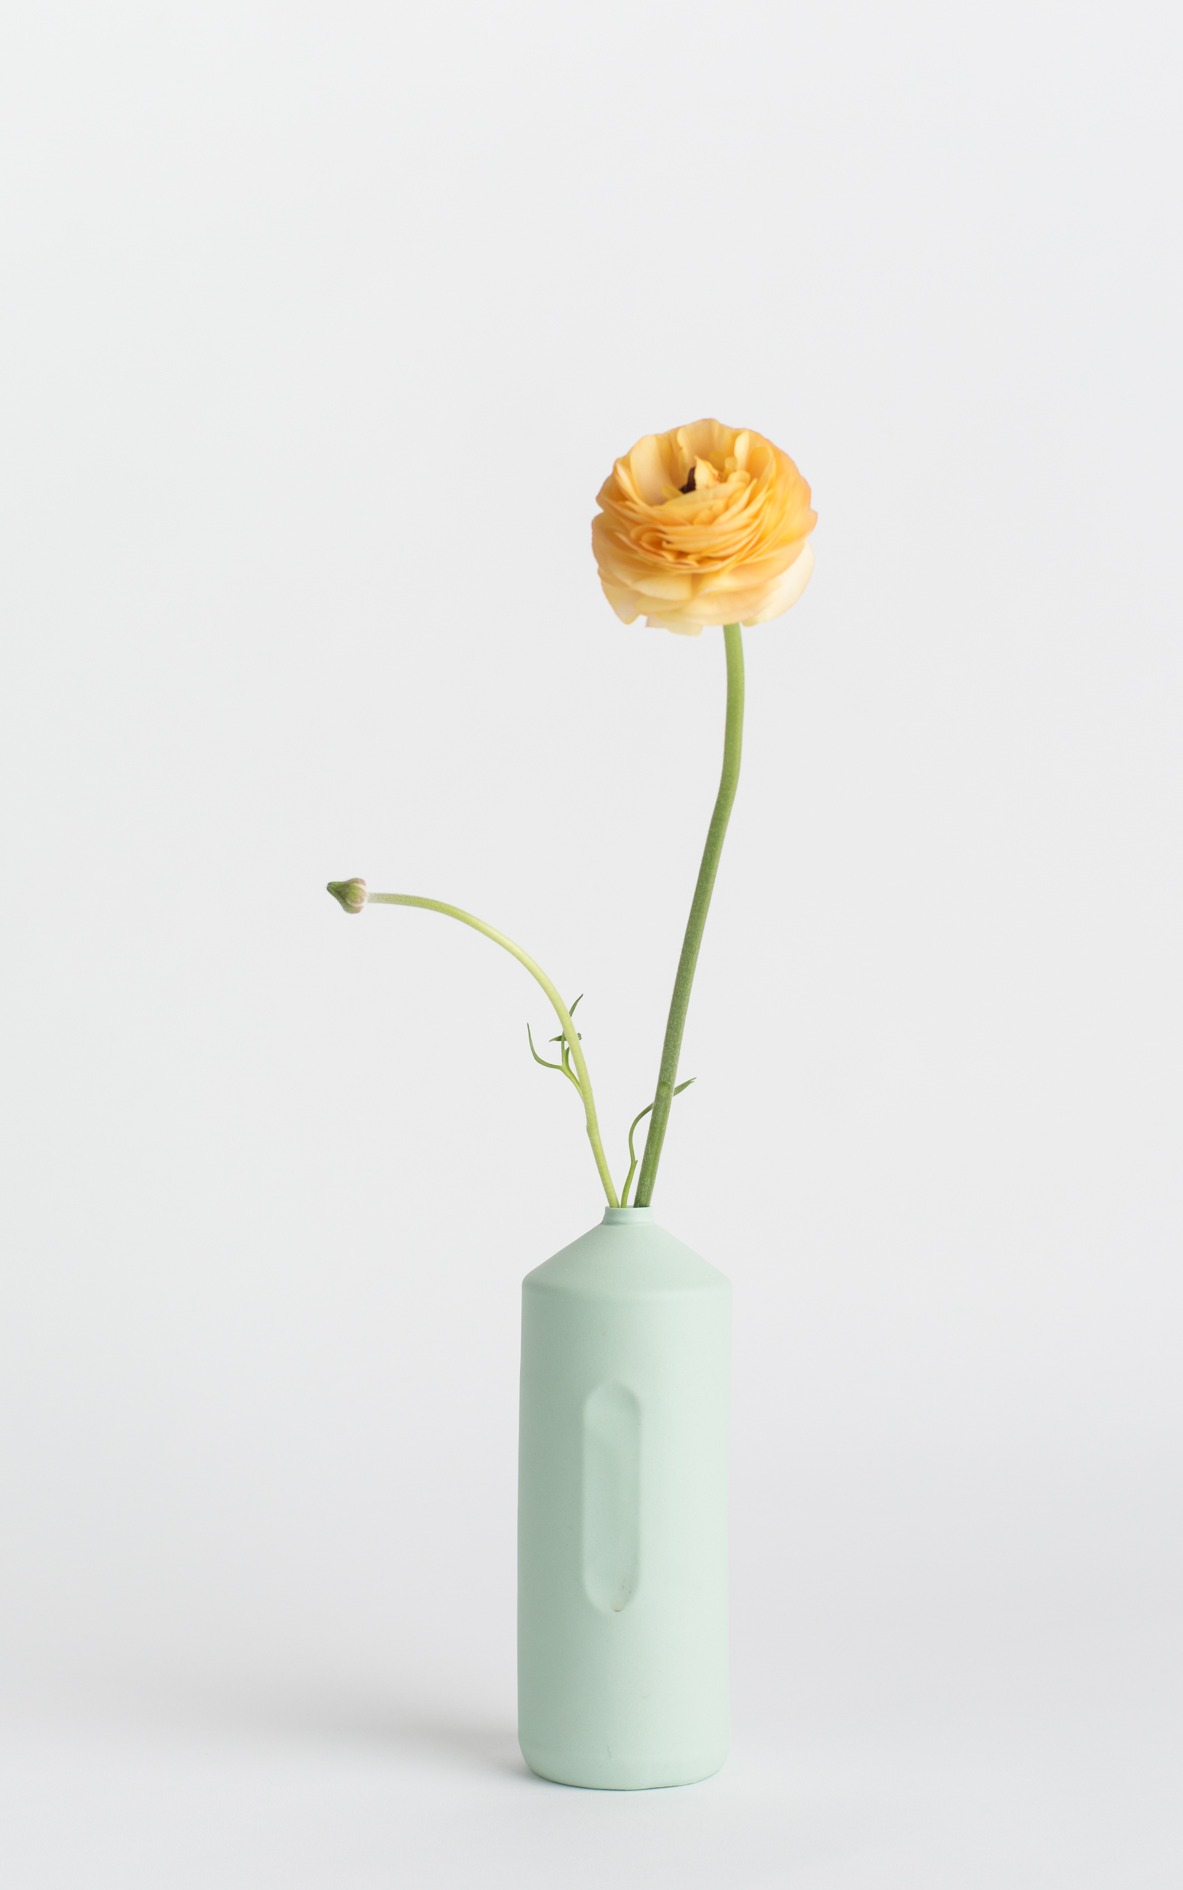 bottle vase #2 mint with flower